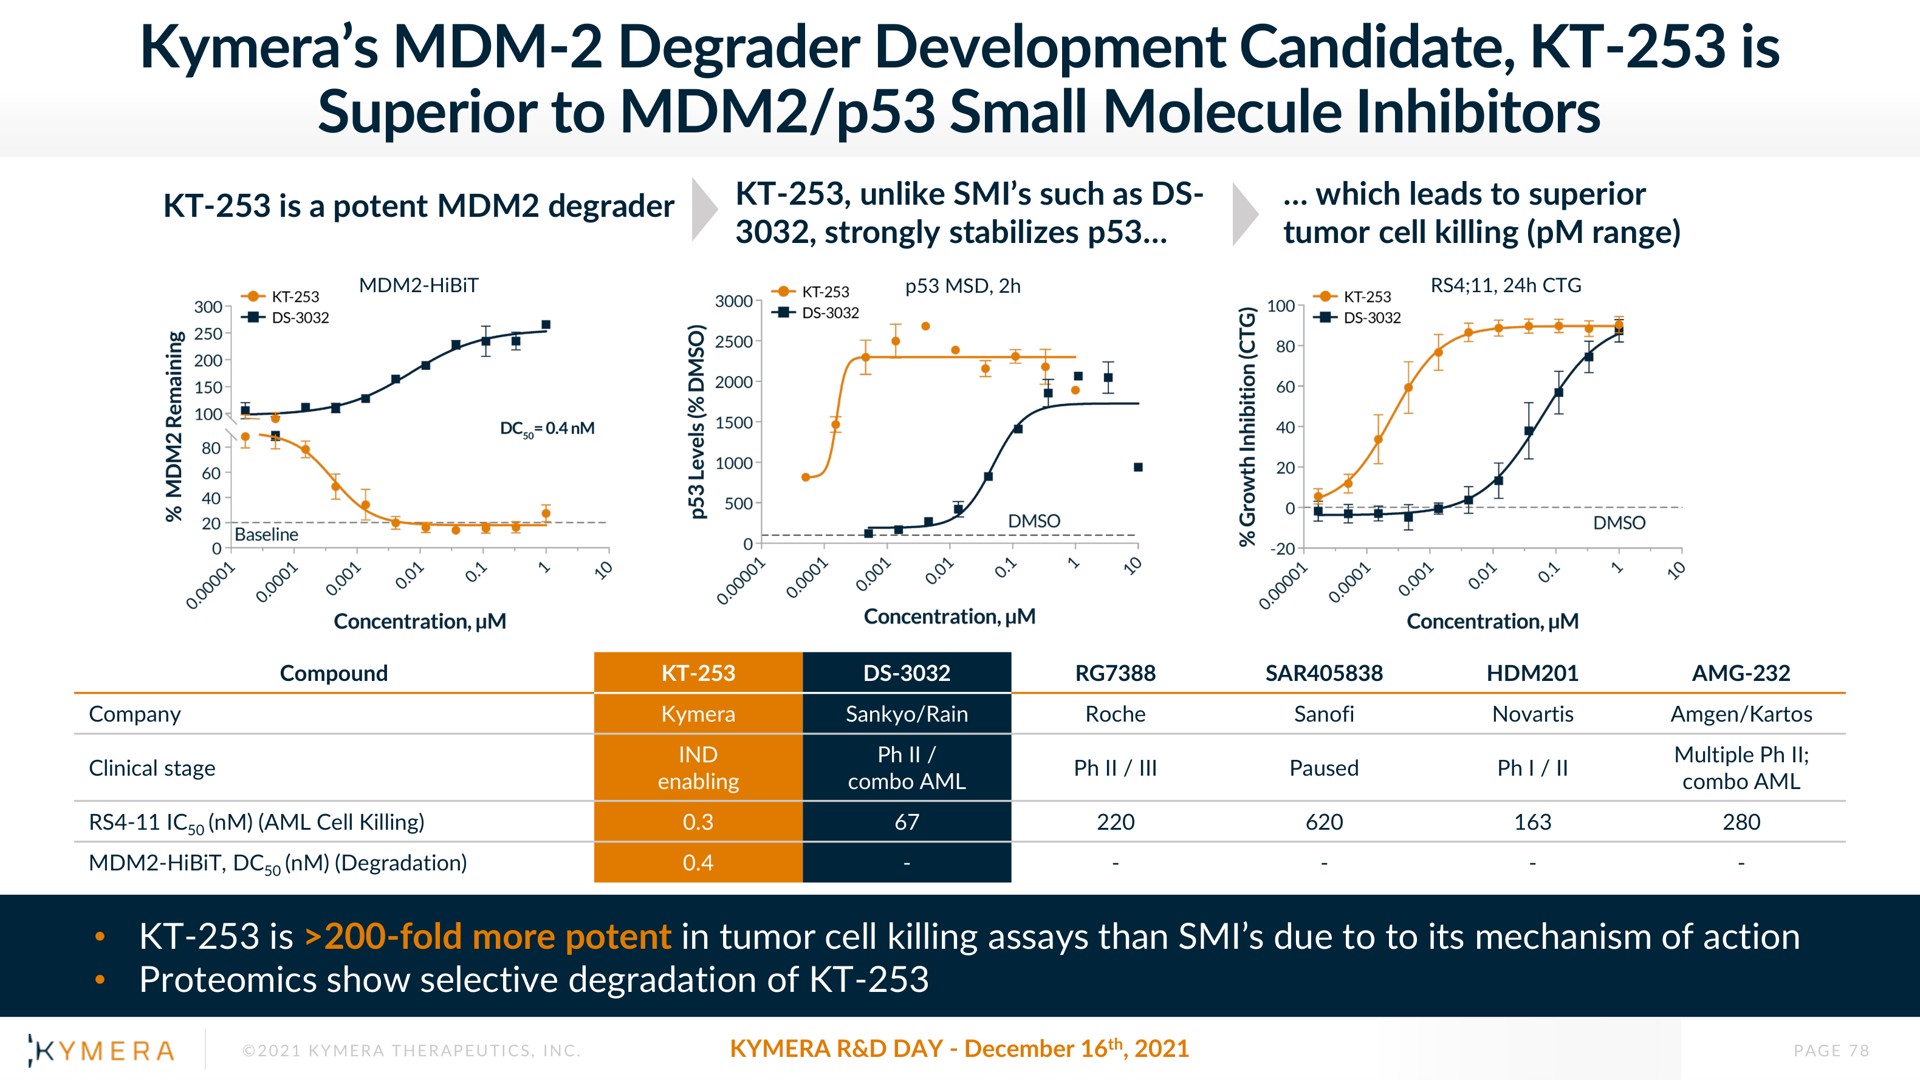 degrader development candidate is superior to small molecule inhibitors | Kymera